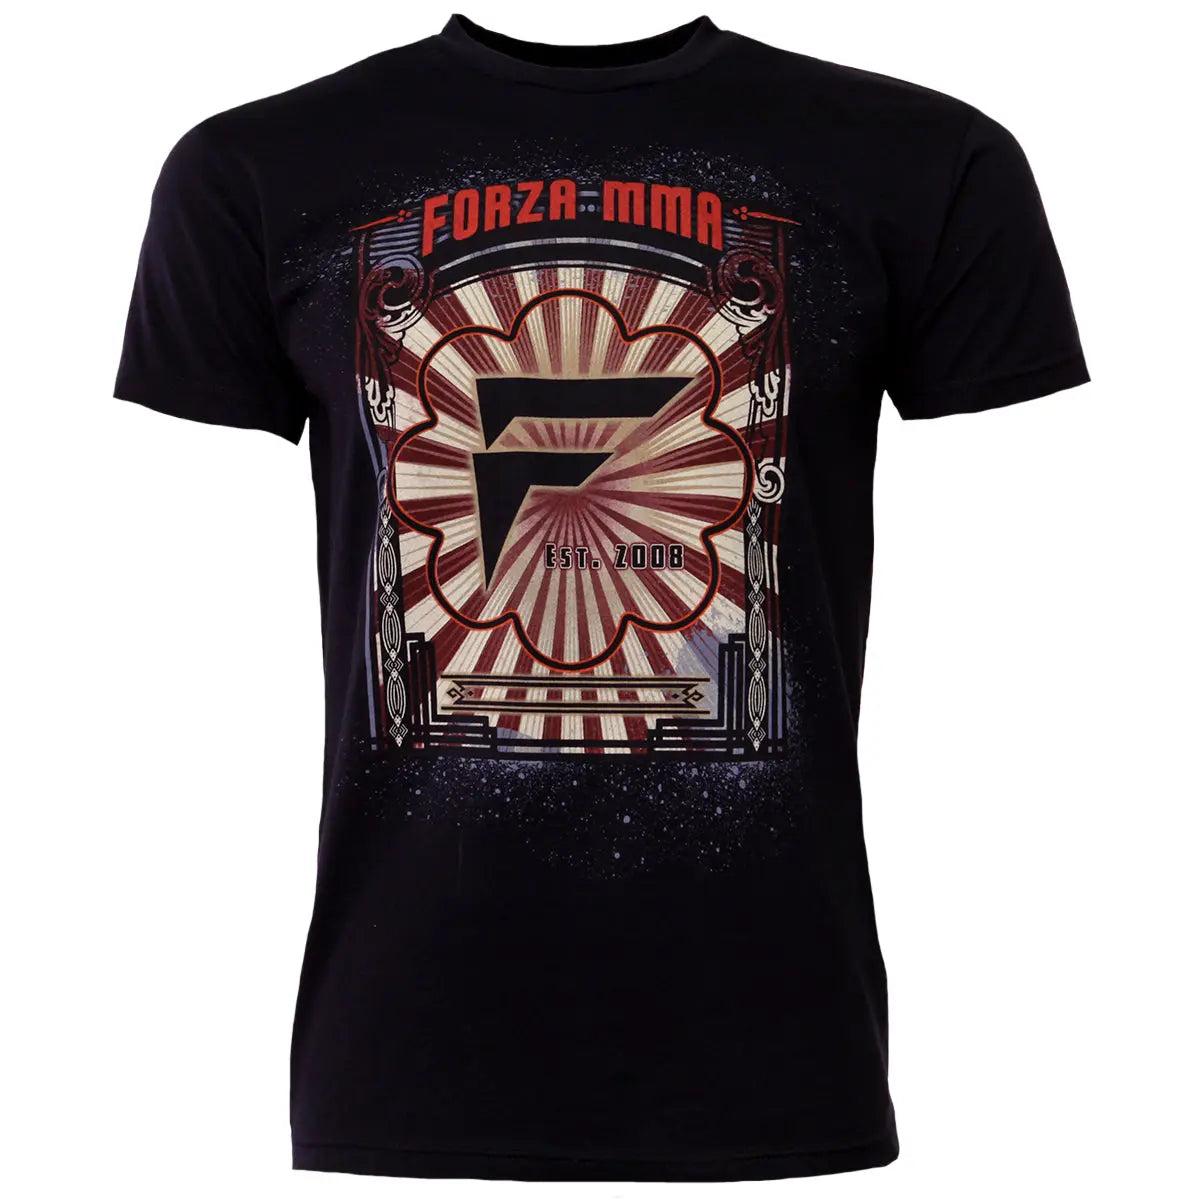 Forza Sports "Awakening" MMA T-Shirt - Black Forza Sports